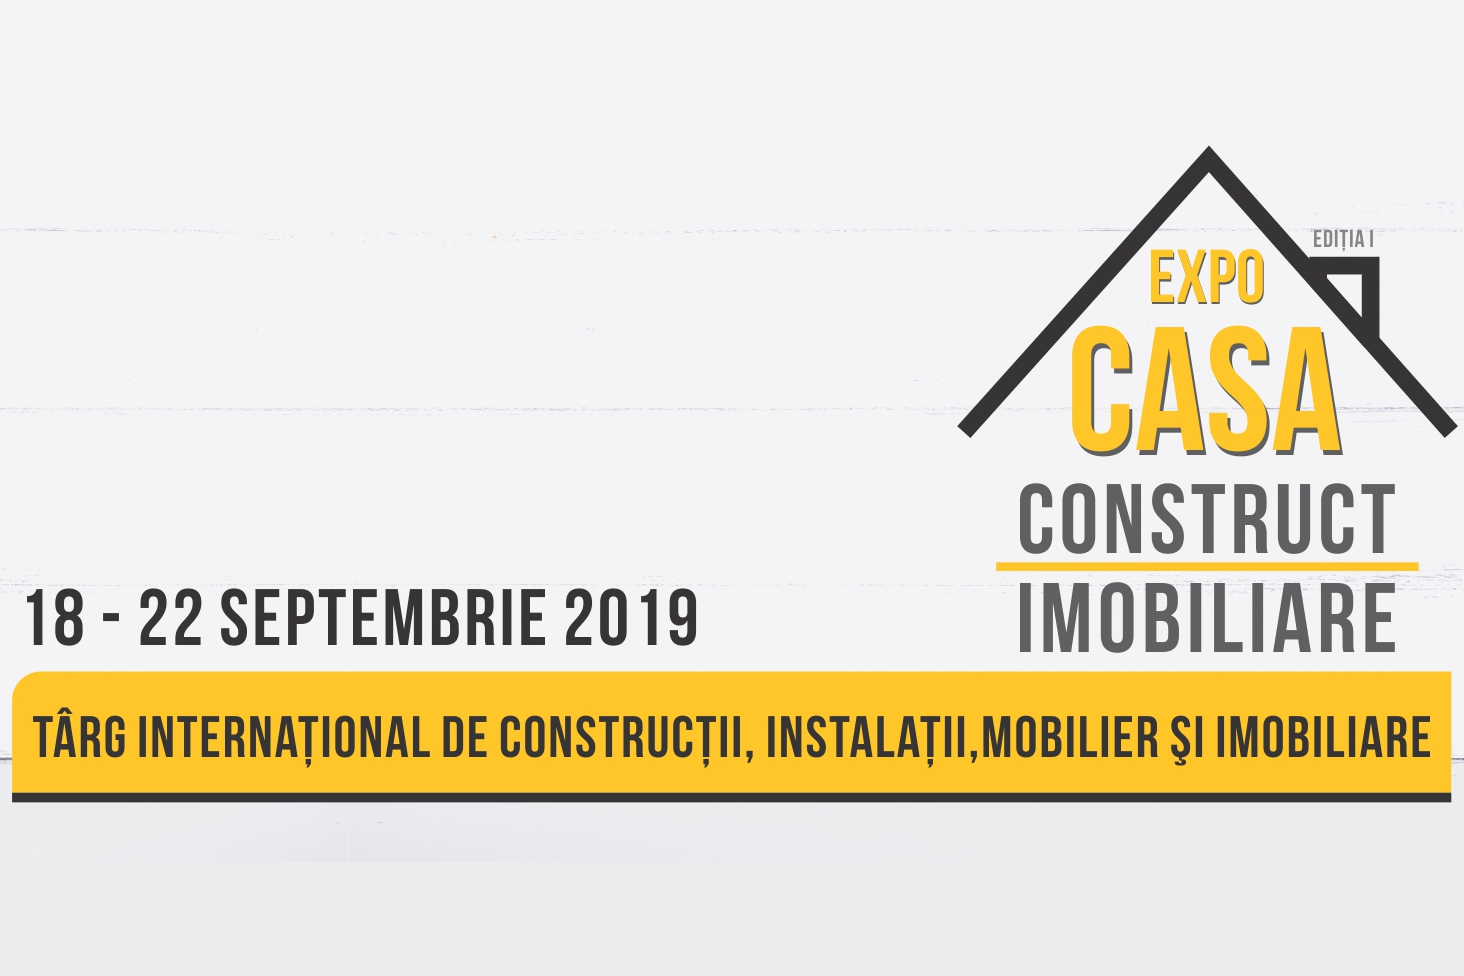 Expo Casa, Construct & Imobiliare 2019 - Targ international de constructii, instalatii, mobilier si imobiliare